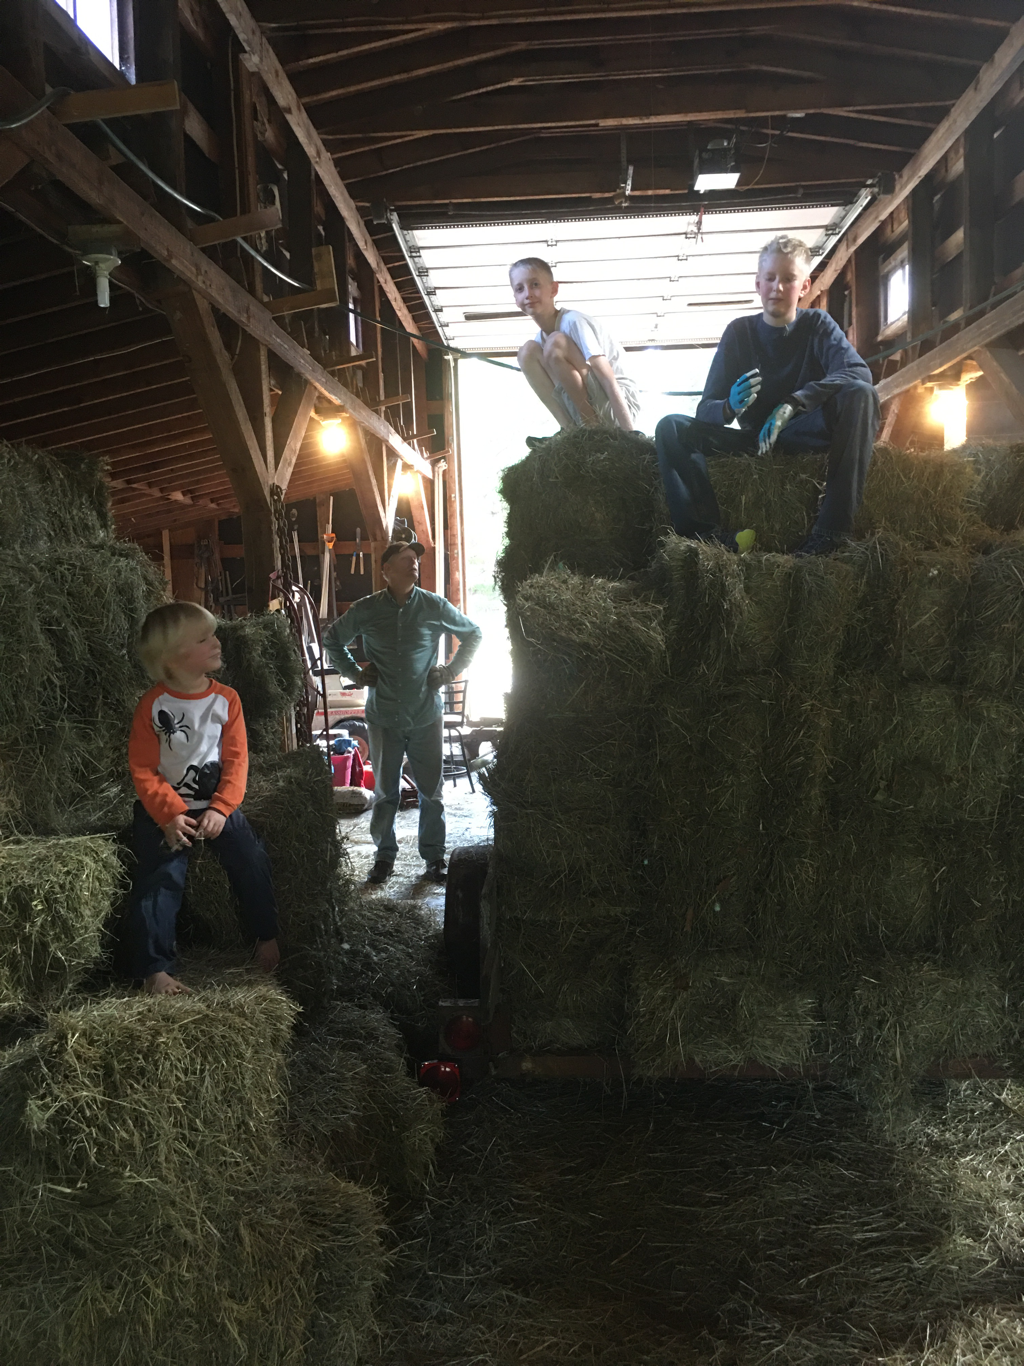 Barn and wagon full of hay.